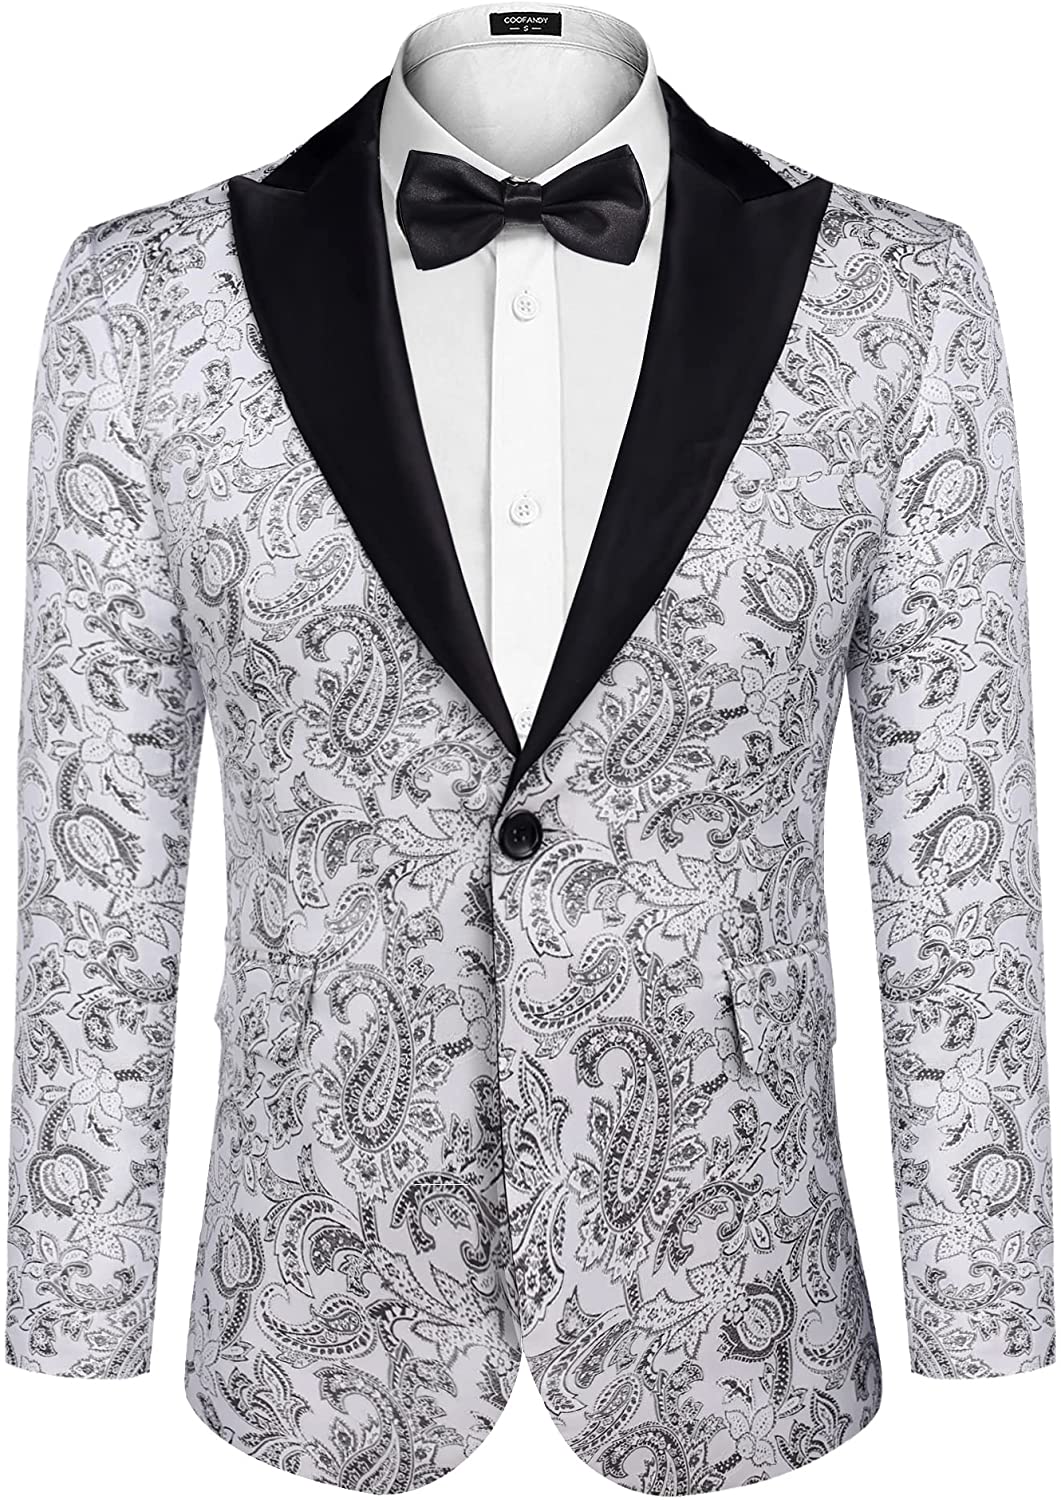 COOFANDY Men's Floral Party Dress Suit Stylish Dinner Jacket